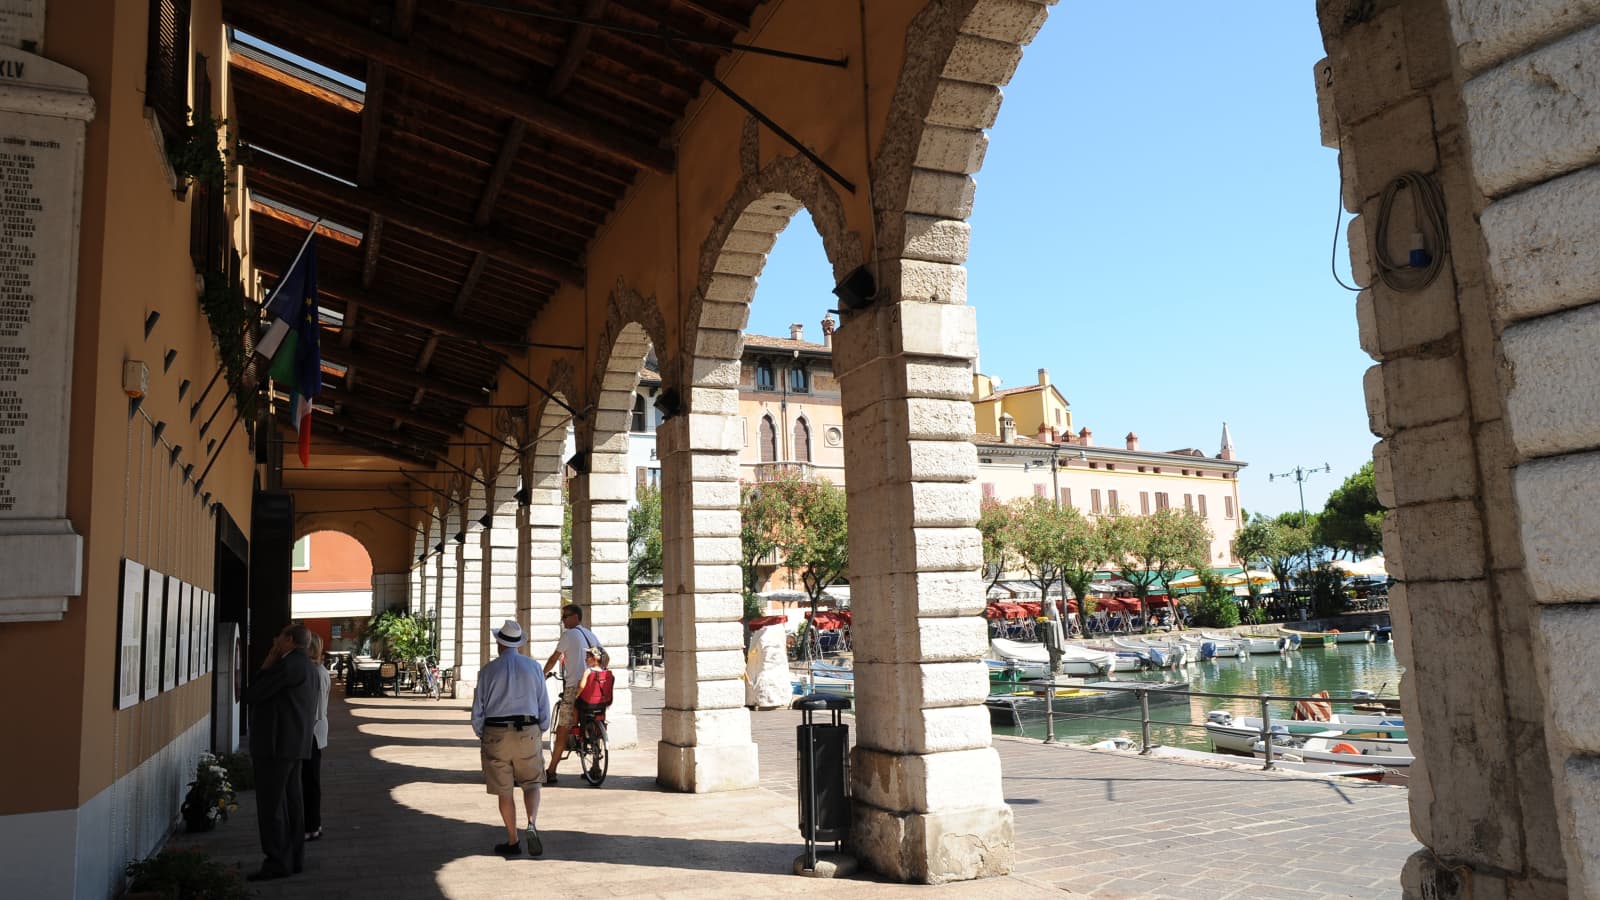 Holidays in Verona ↔ Discover Lake Garda!